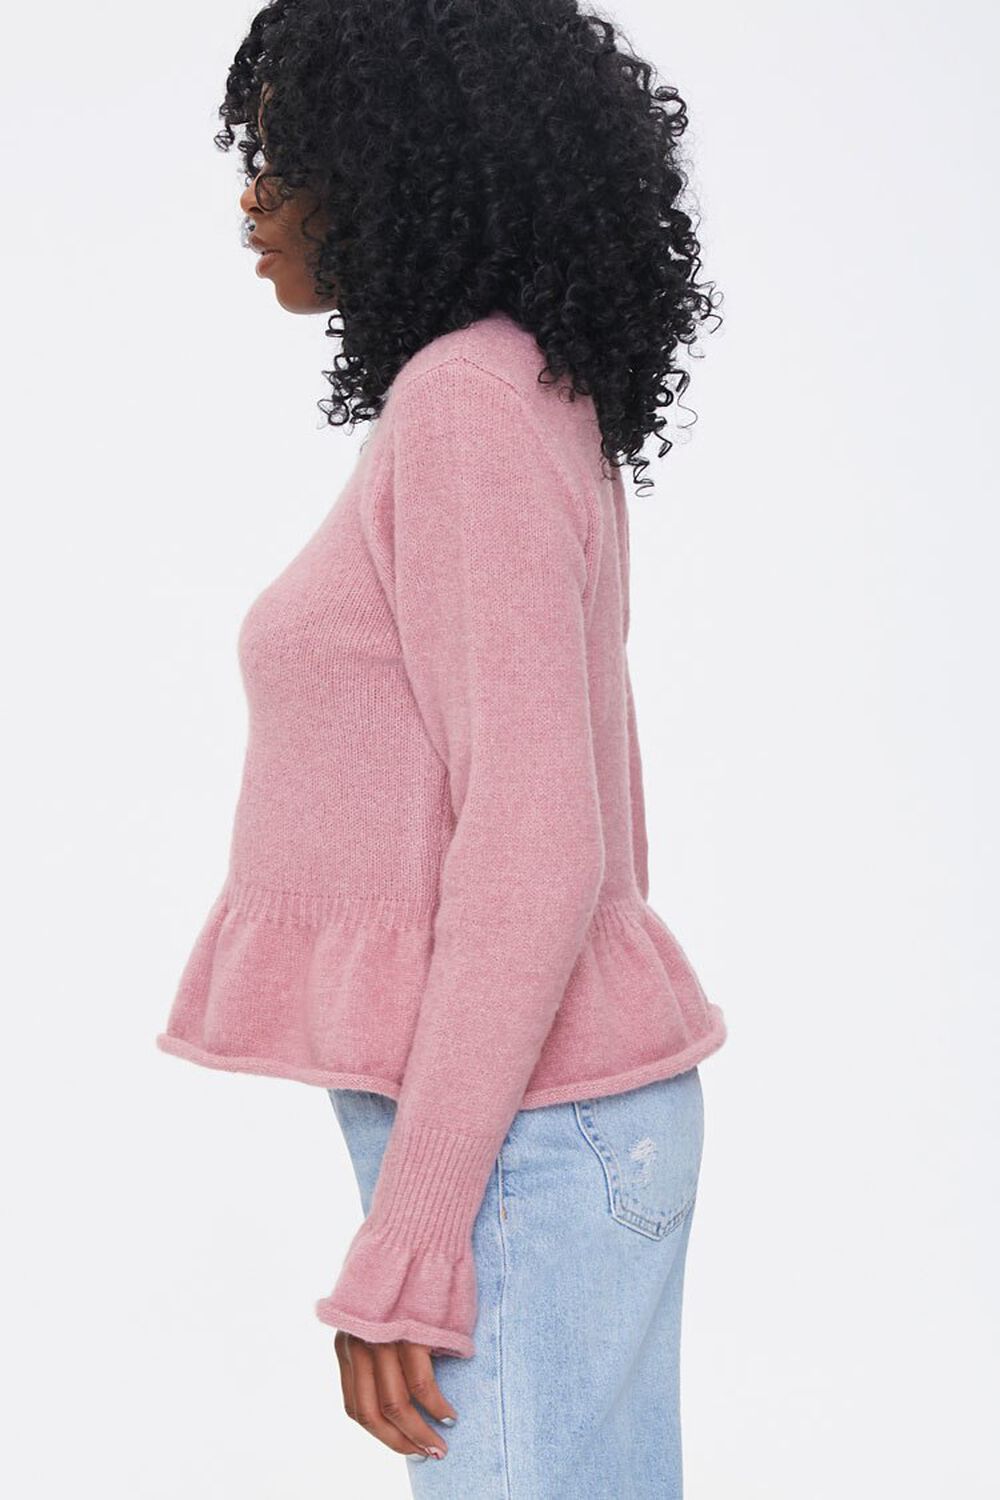 ROSE Rolled Ruffle-Trim Sweater, image 2